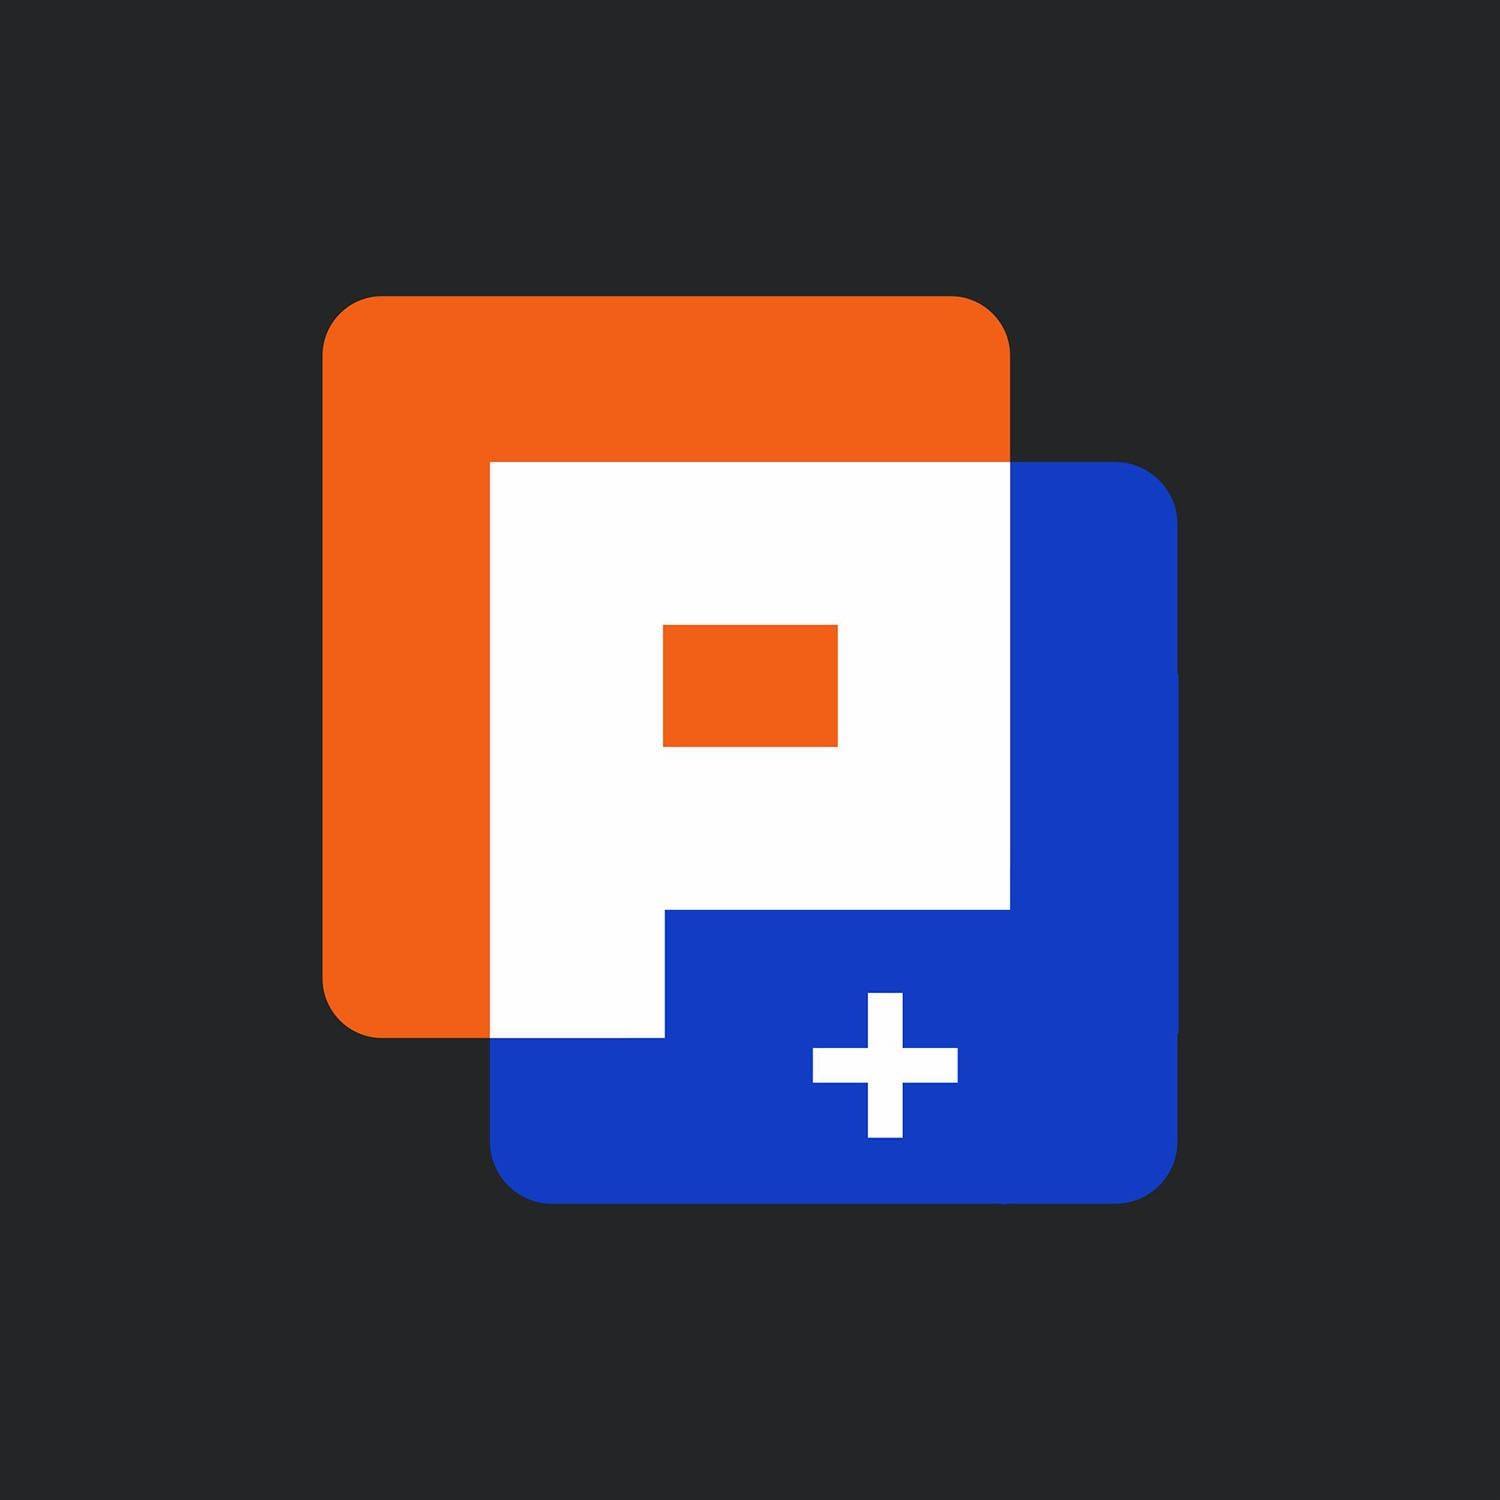 P Plus Fulfillment Services business logo picture